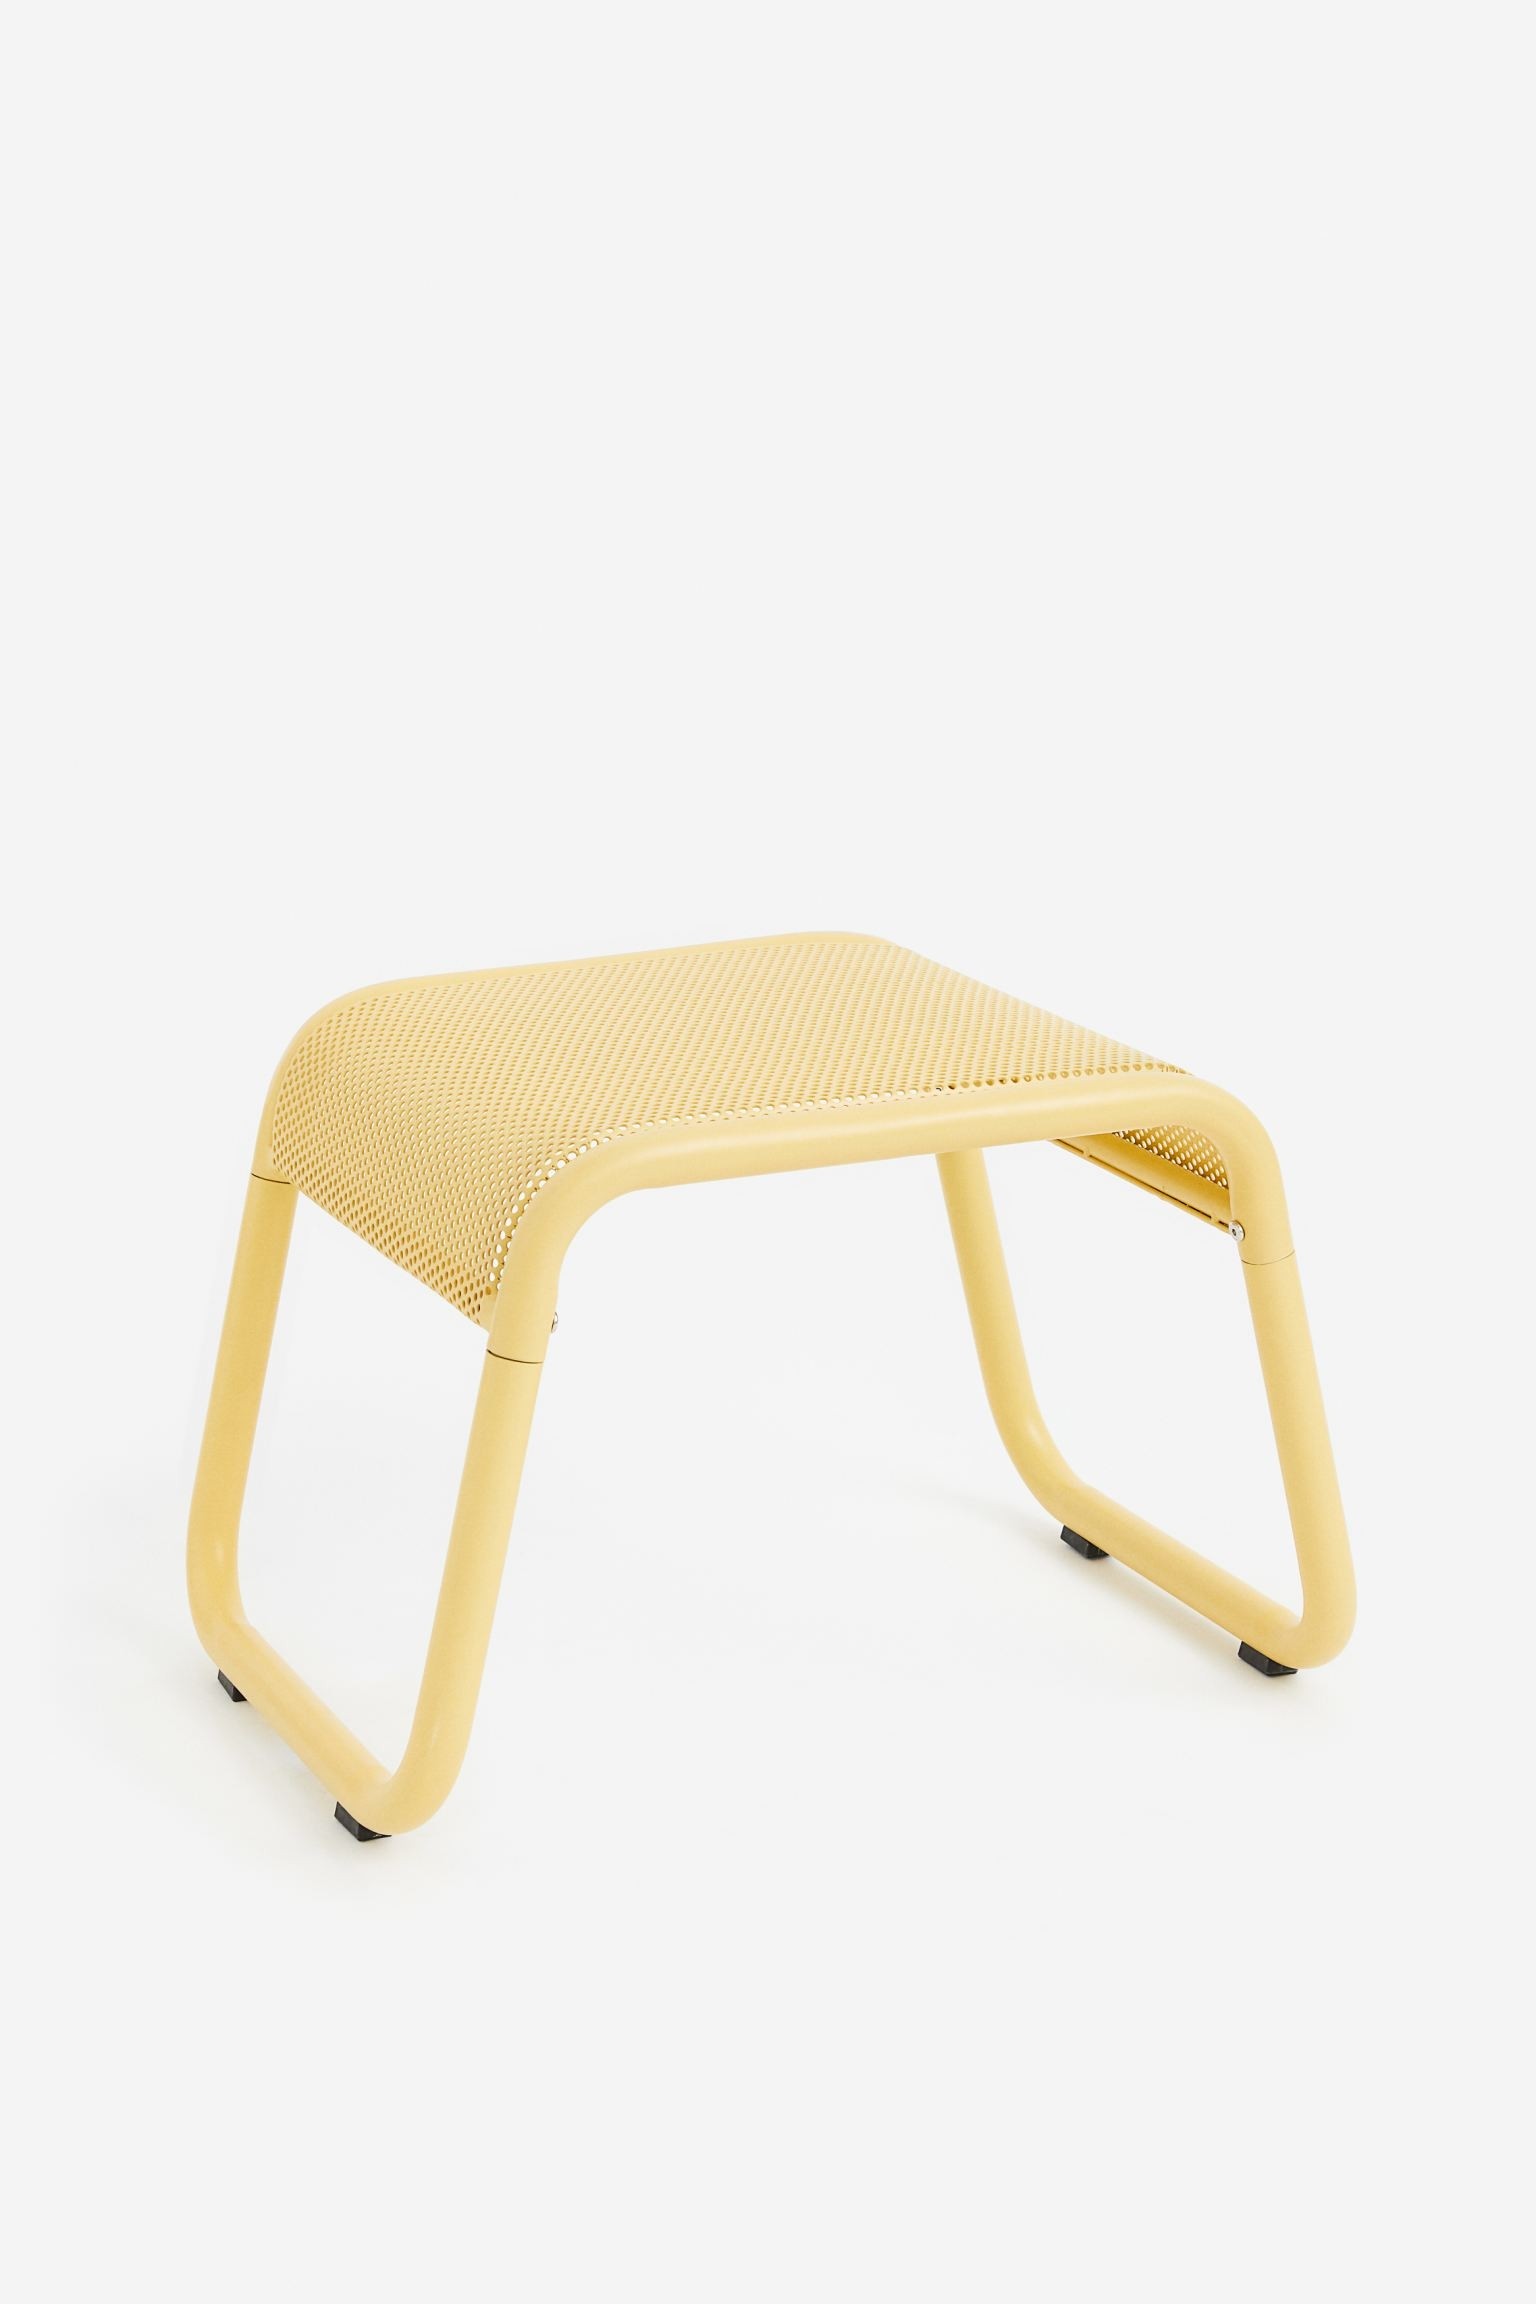 H&M Home Металлический столик, Светло-желтого 1114813002 | 1114813002